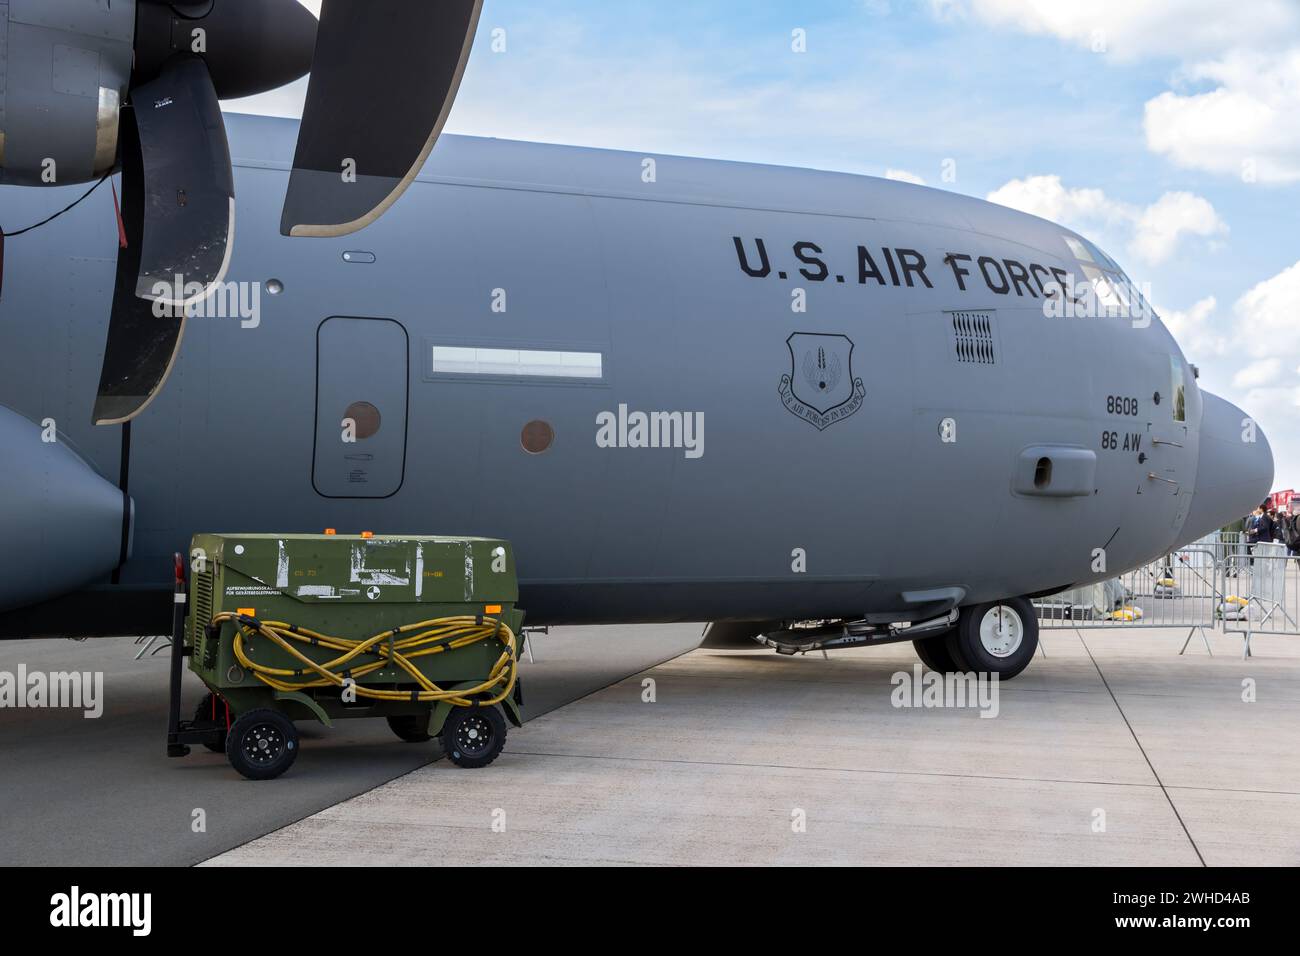 US Air Force Lockheed Martin C-130J Hercules transport plane at the Berlin ILA. Germany - April 27, 2018 Stock Photo